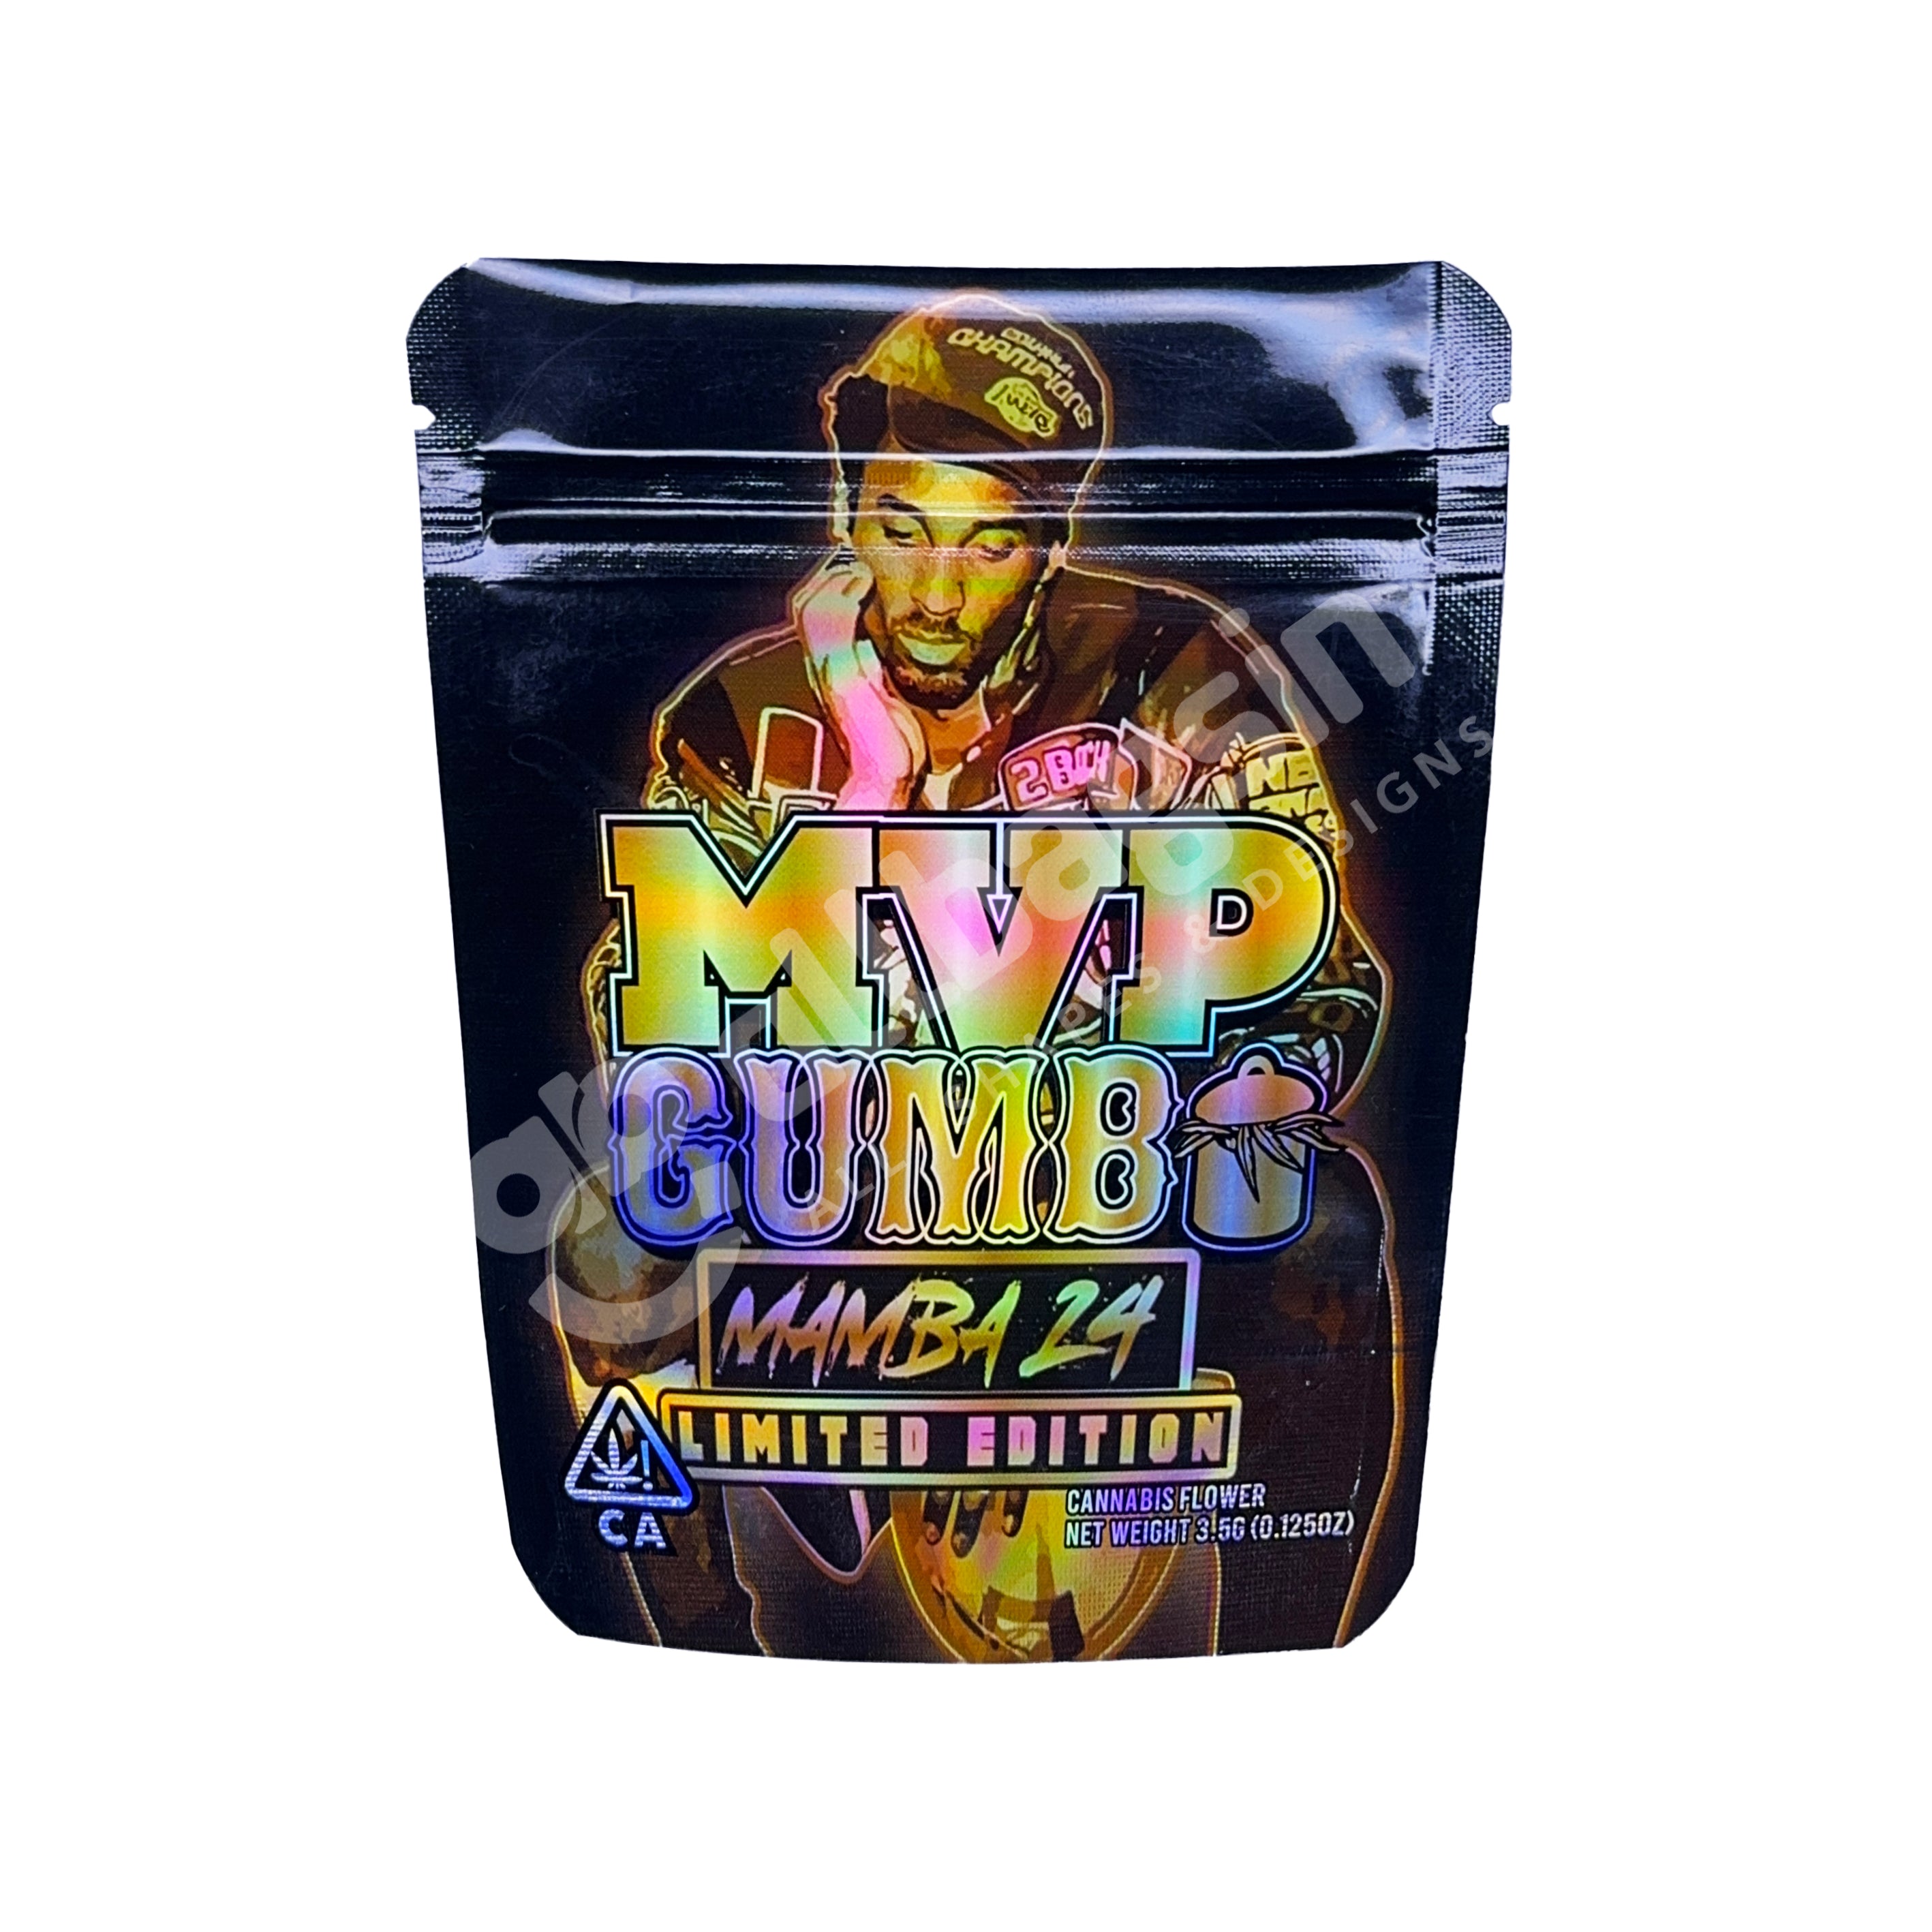 Gold Kobe MVP Gumbo Mamba 24 Limited Edition 3.5g Mylar Bag